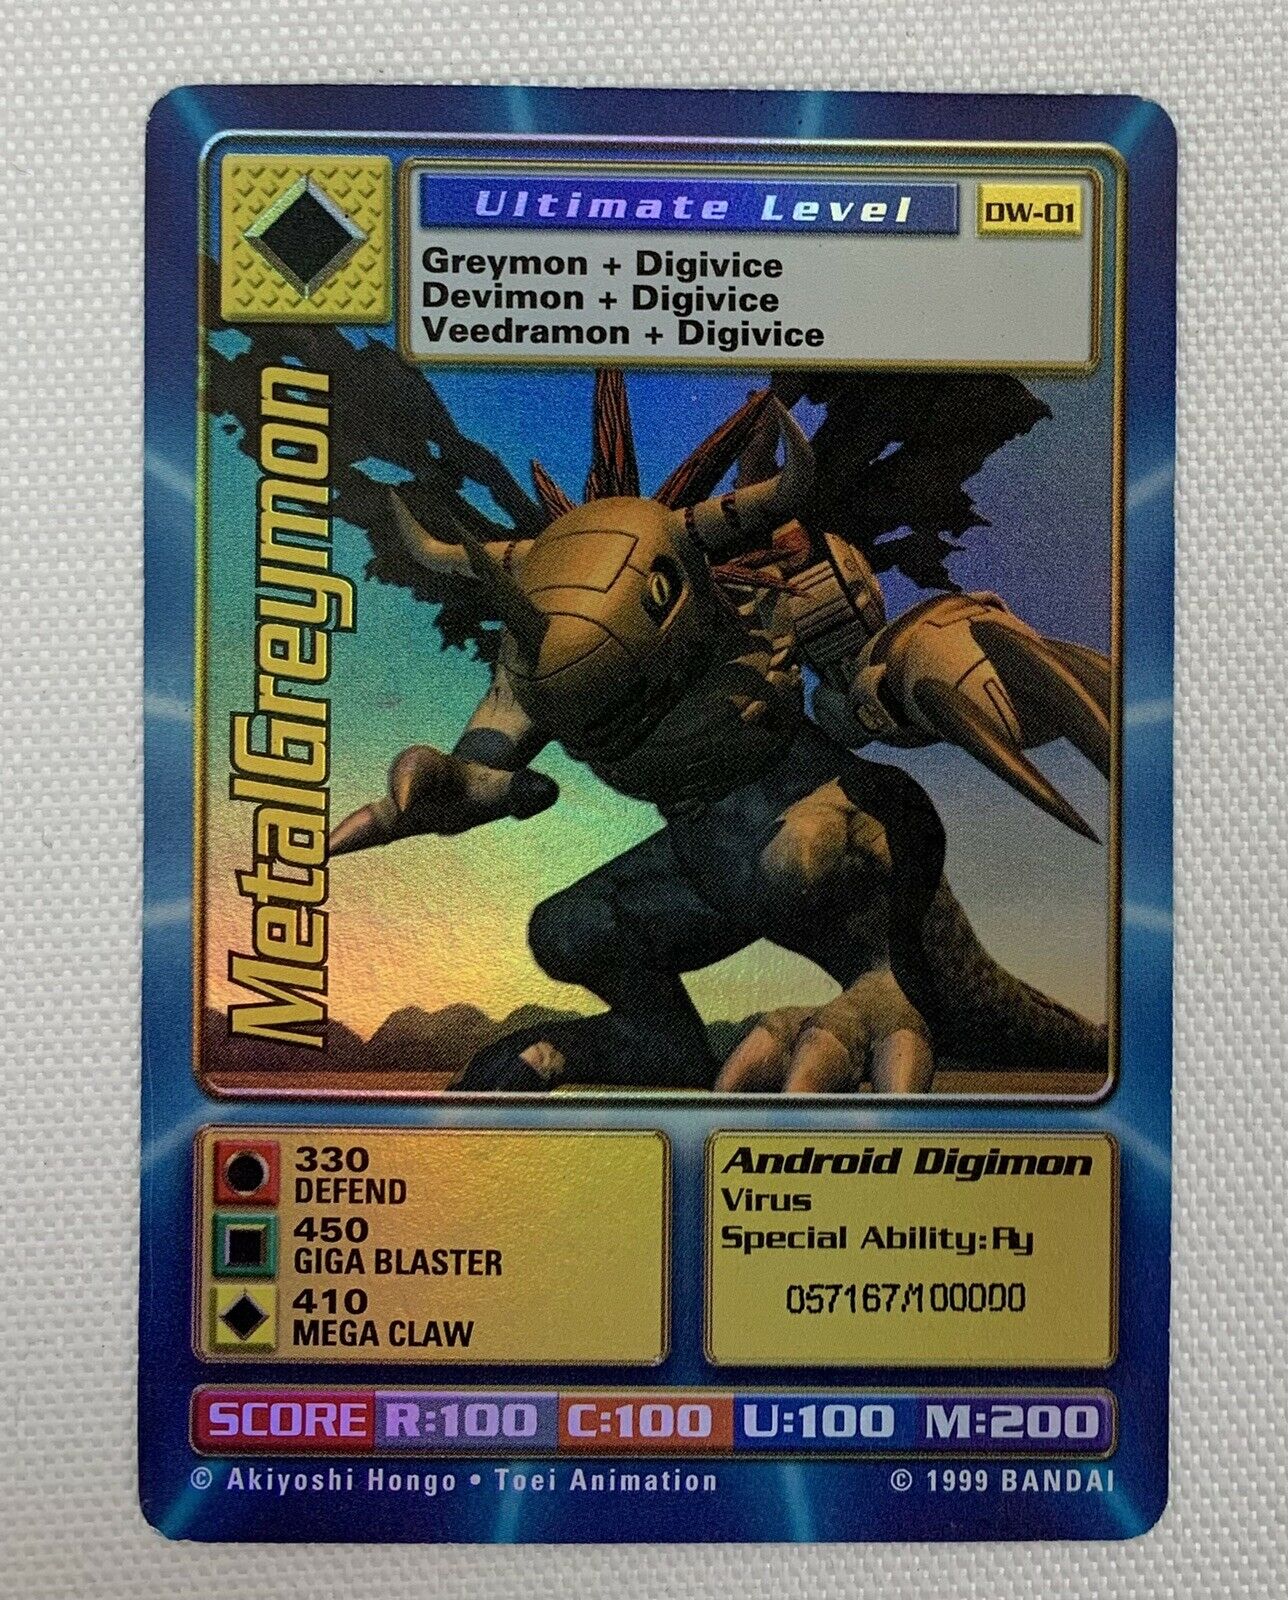 Digimon World PlayStation Promo DW-01 MetalGreymon - number 057167 / 100,000